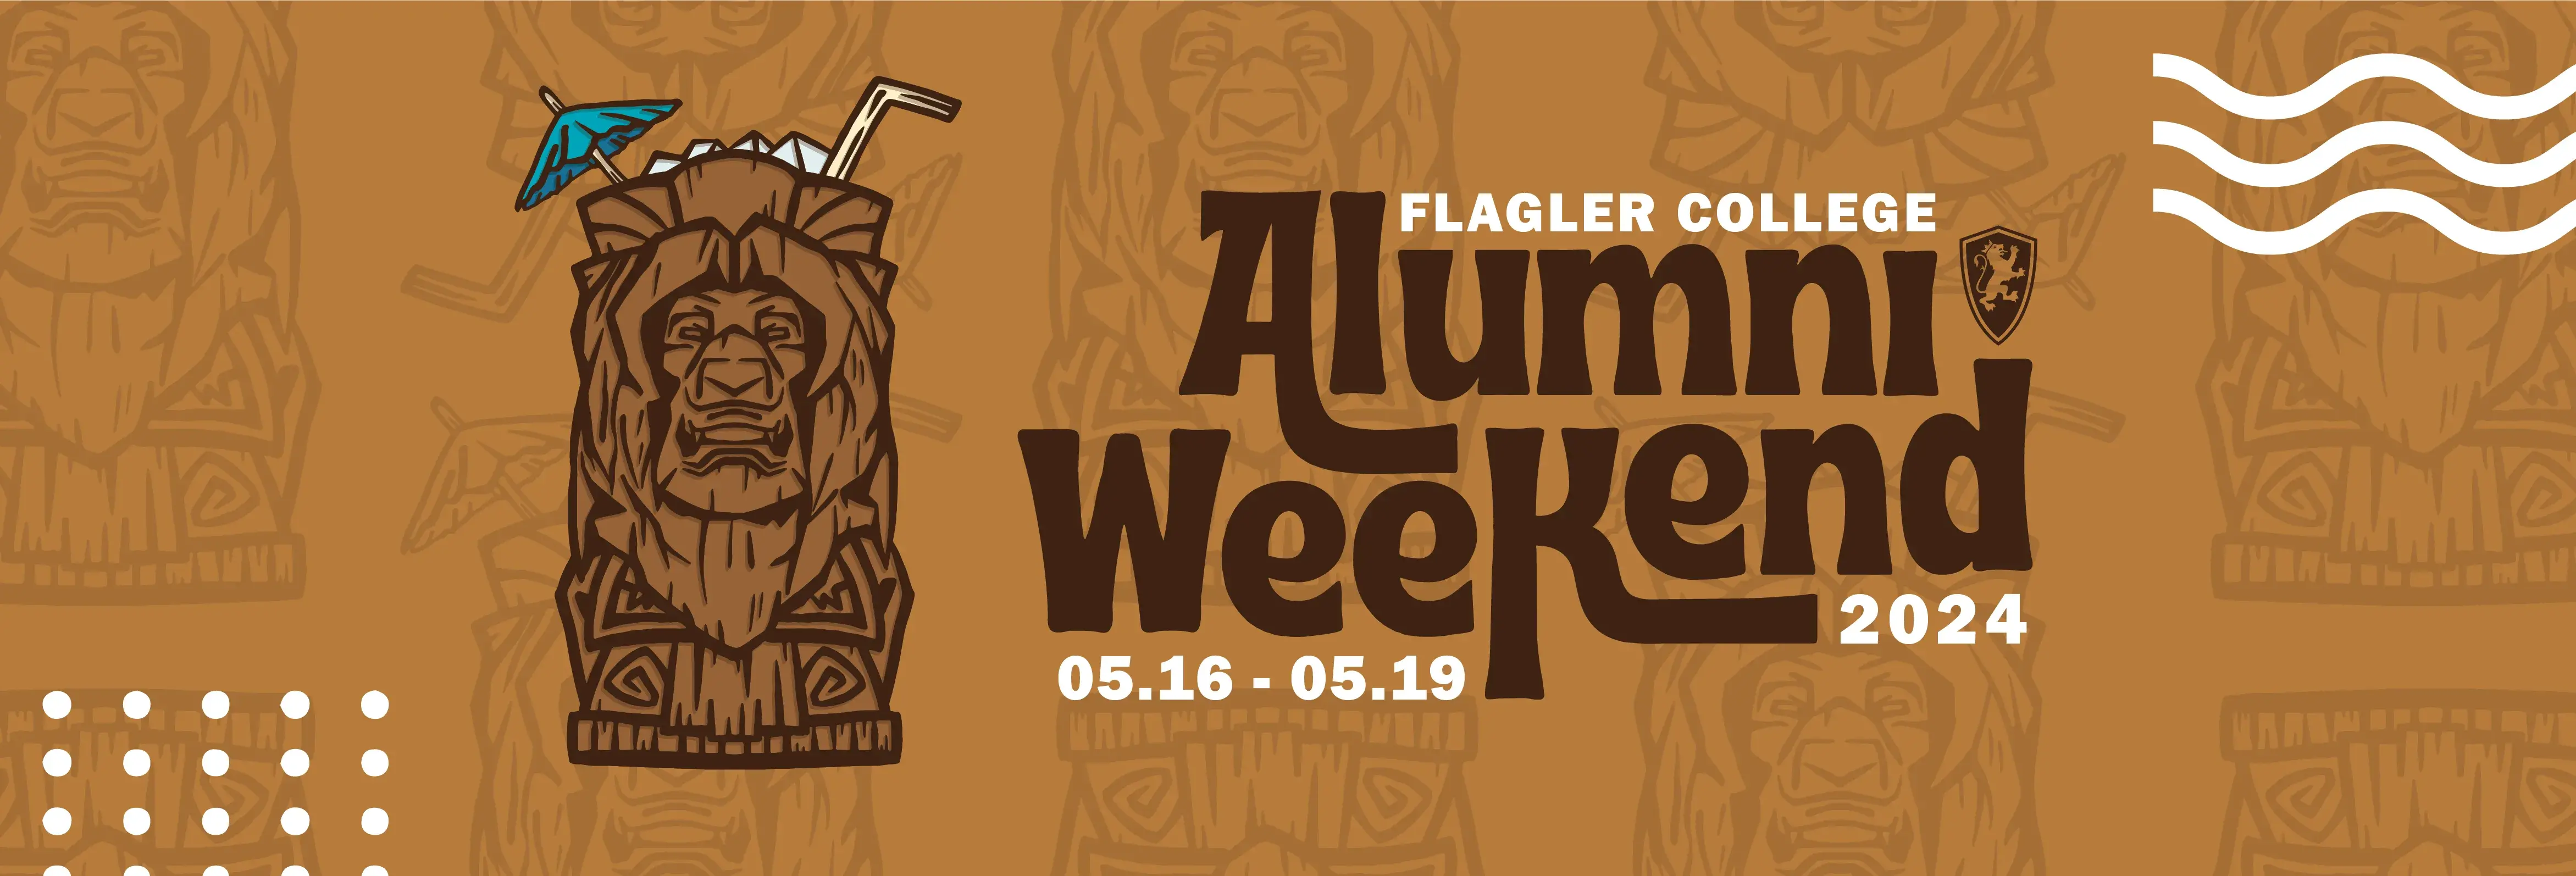 Alumni Weekend 2024 Banner - May 16 to May 19